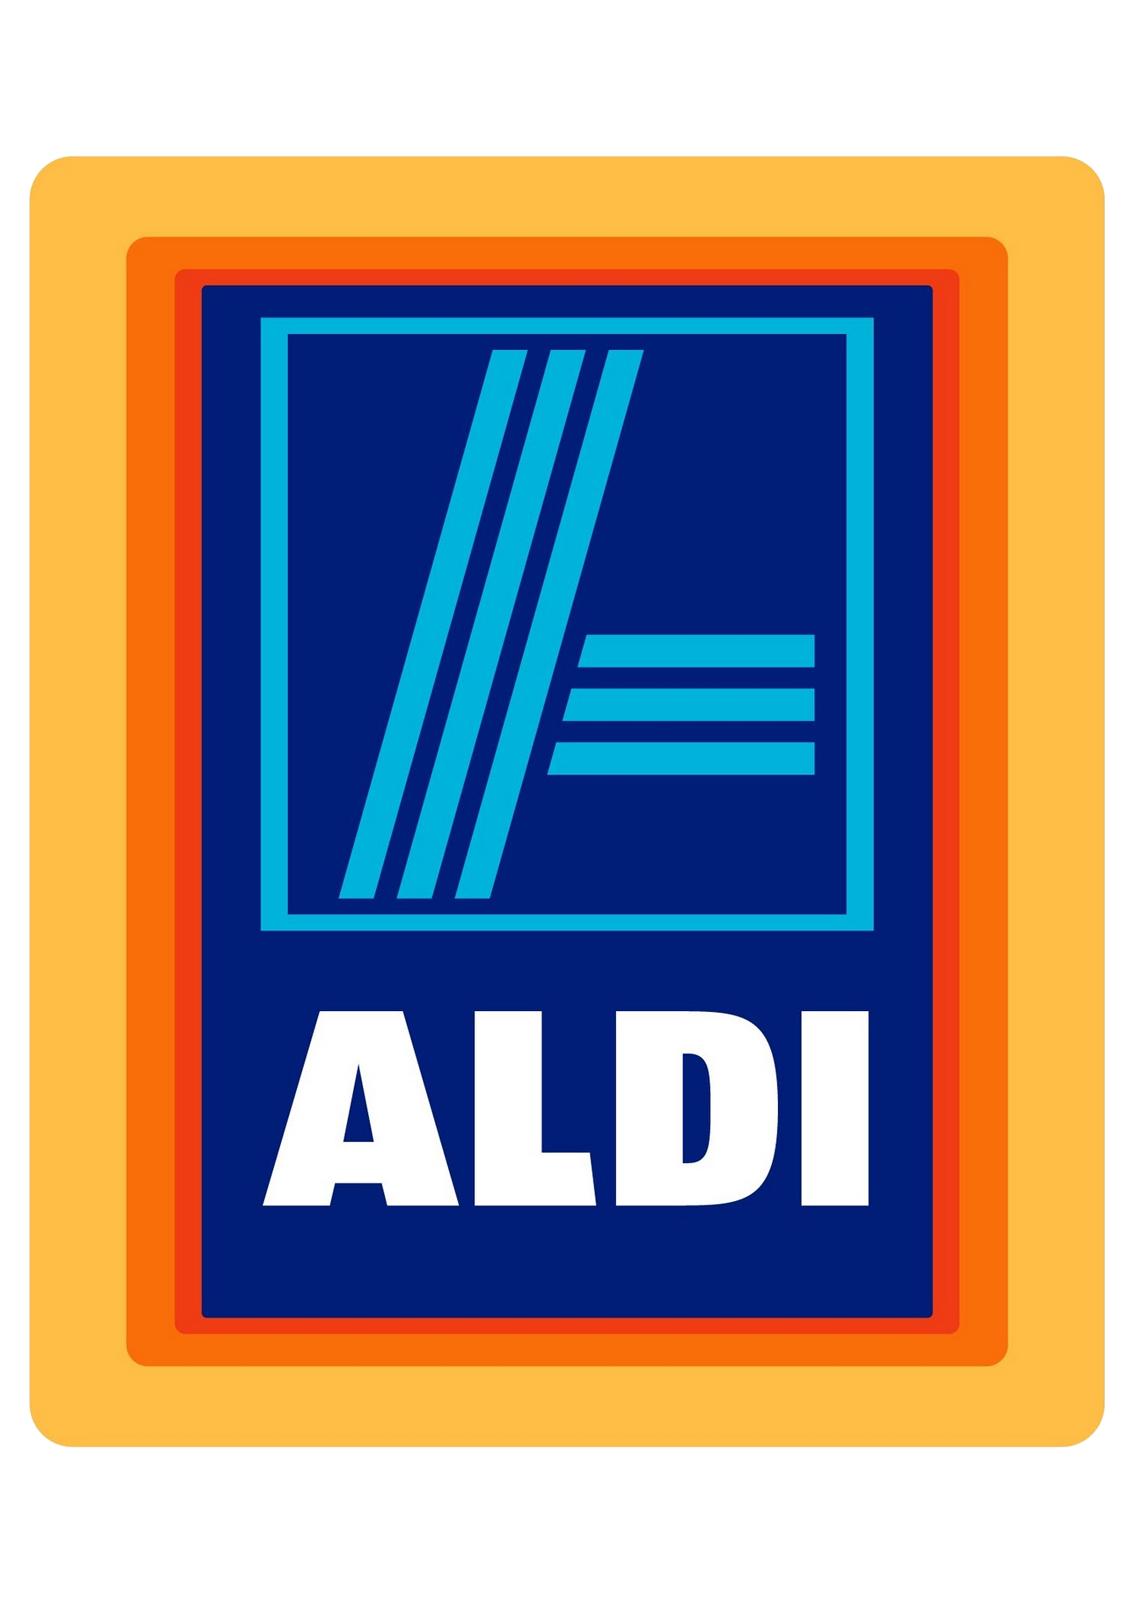 Aldi logo